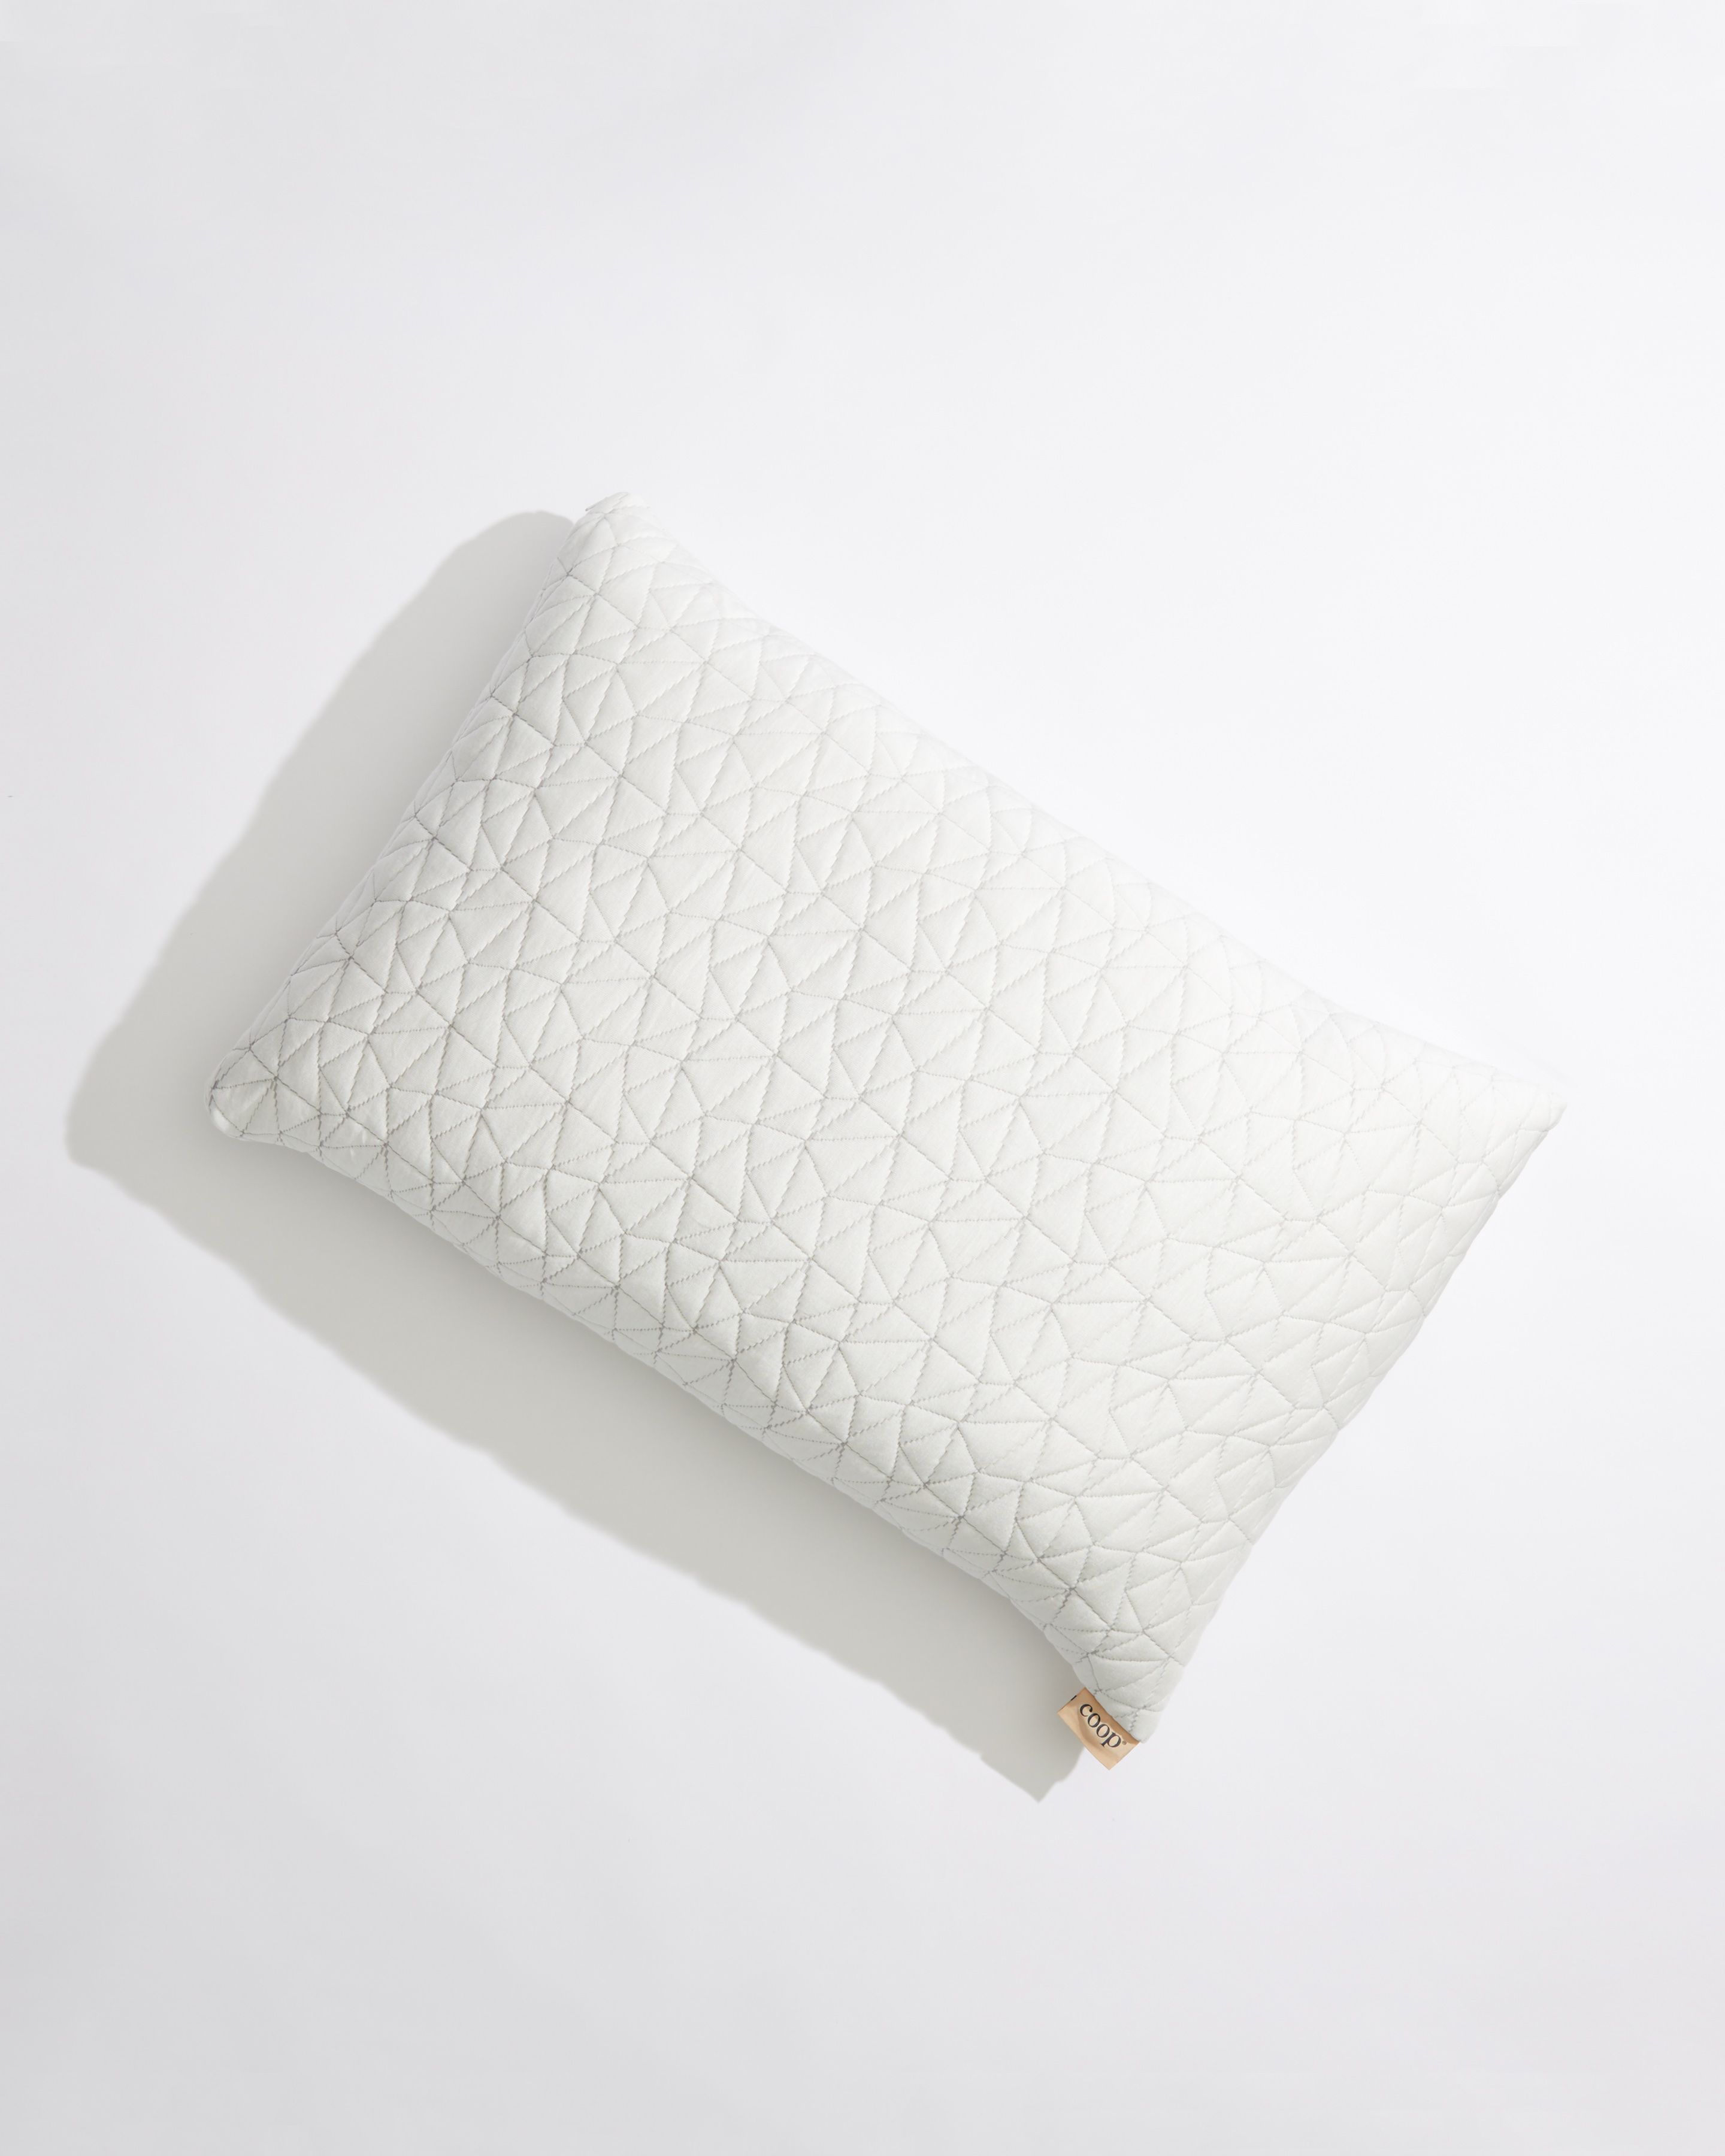 Our Coop Sleep Goods Original Pillow Review for 2024 - Sleep Advisor